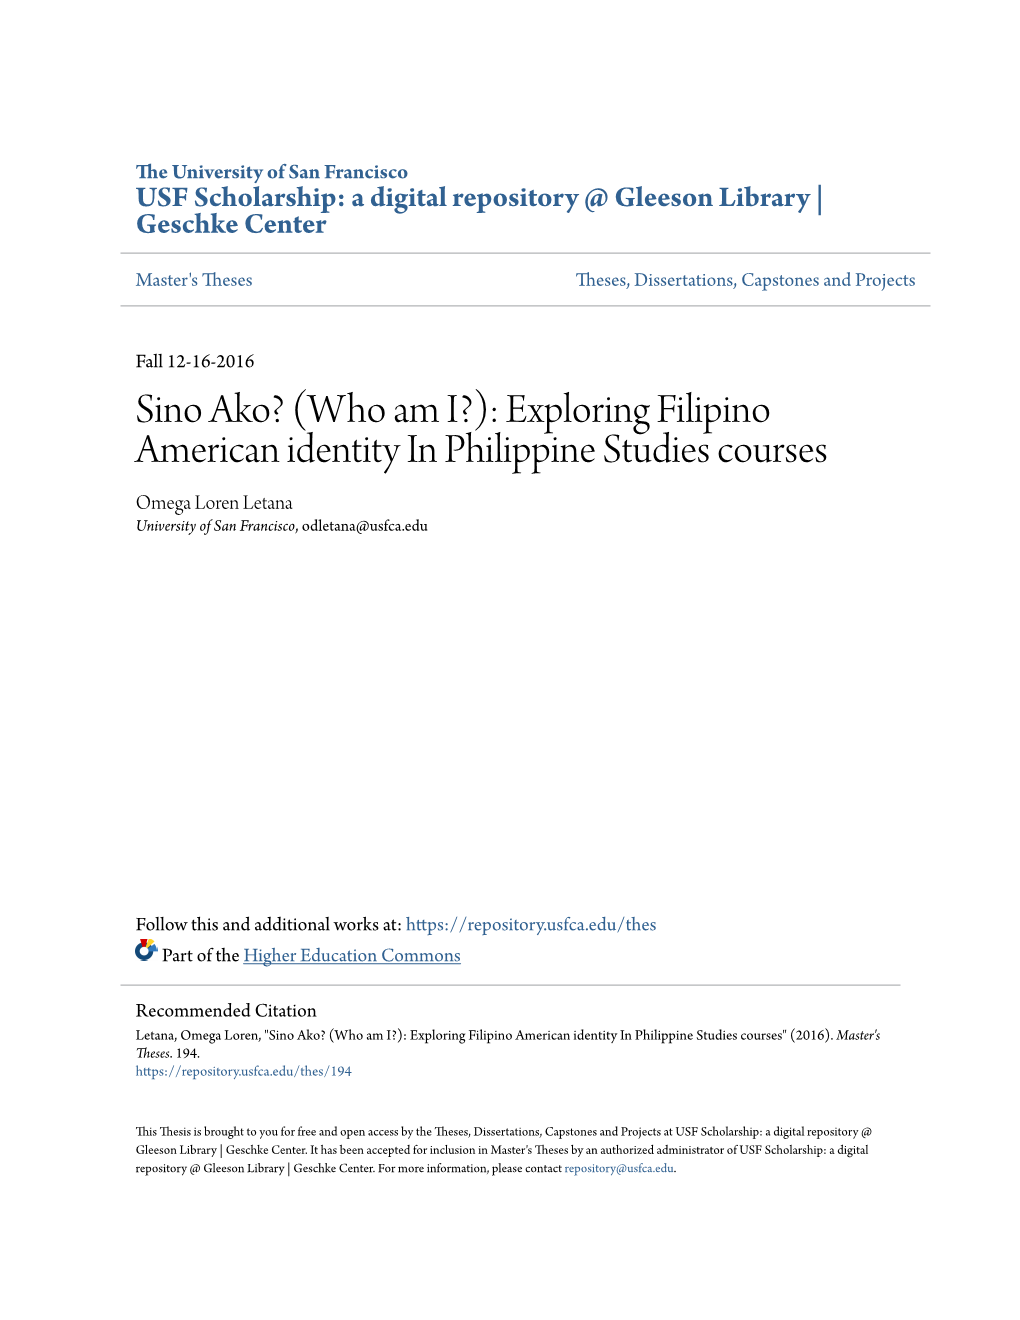 Exploring Filipino American Identity in Philippine Studies Courses Omega Loren Letana University of San Francisco, Odletana@Usfca.Edu